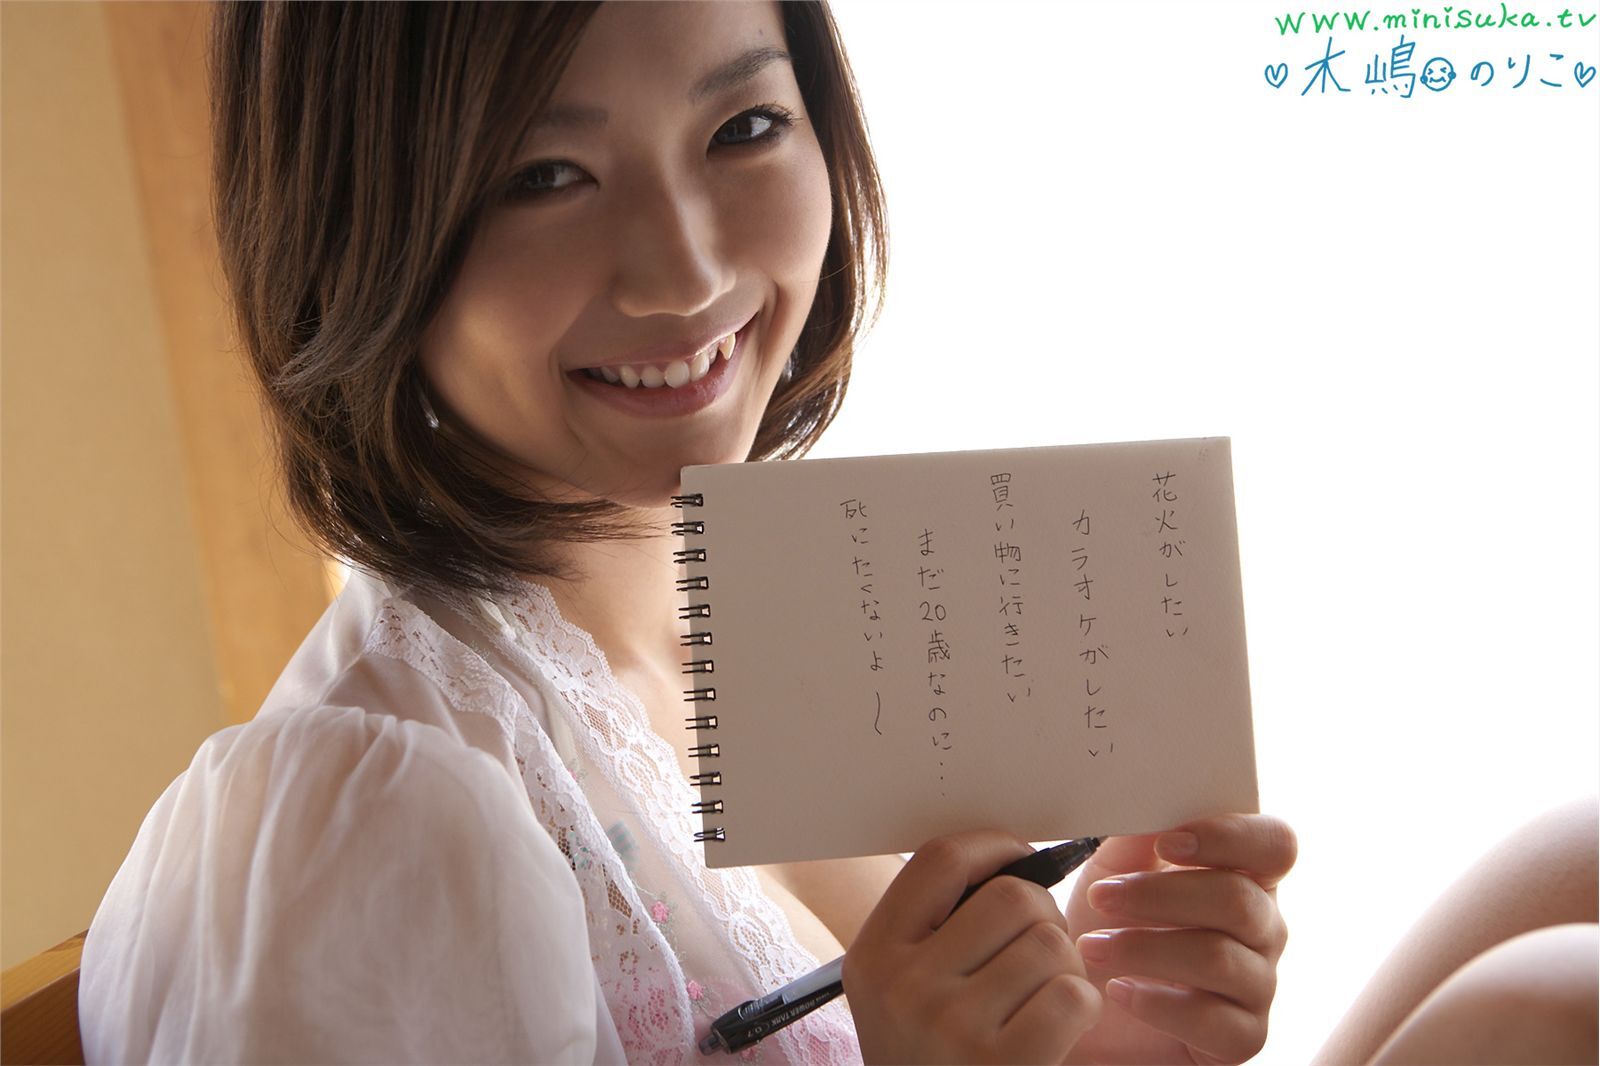 KIJIMA Norio Minisuka. TV High school girl